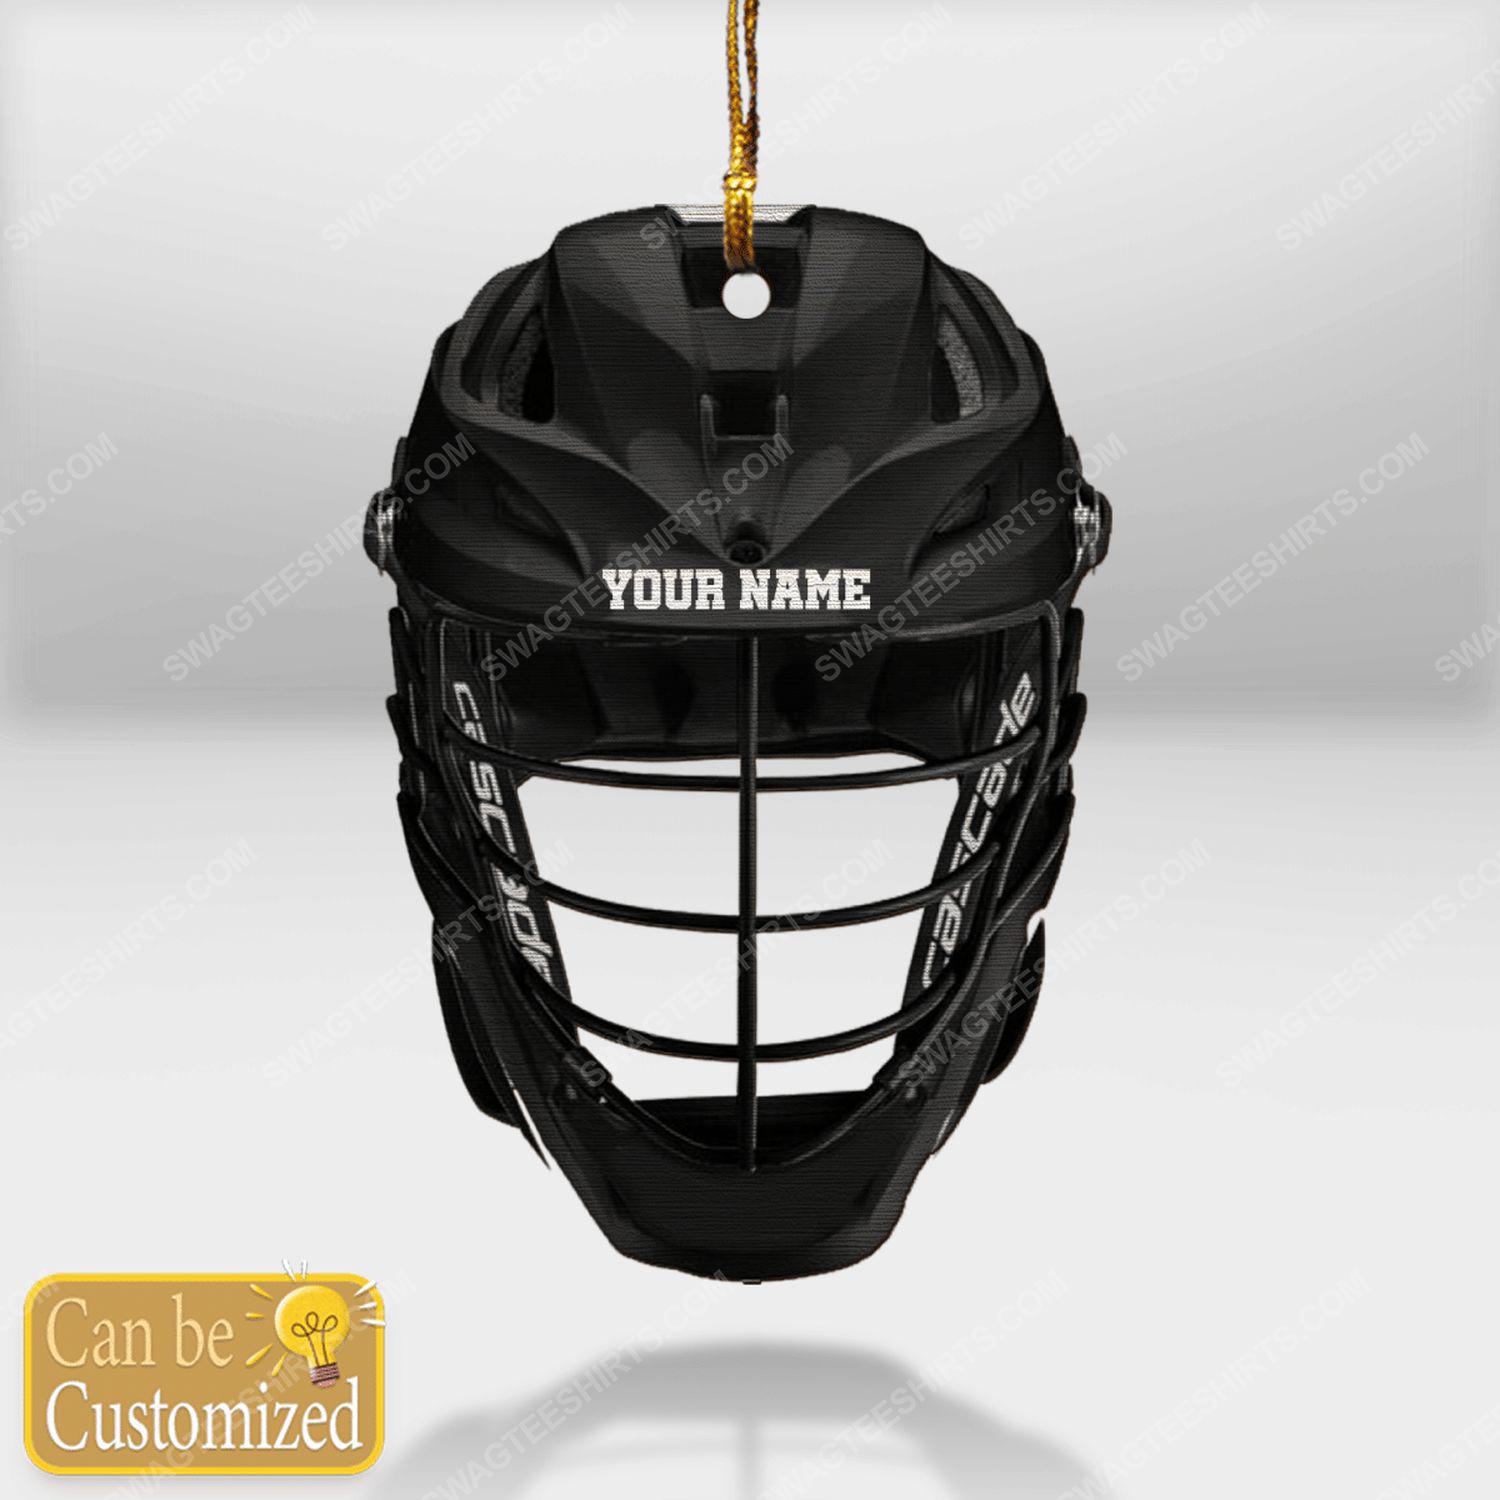 Custom lacrosse helmet black mask christmas gift ornament 1 - Copy (3)